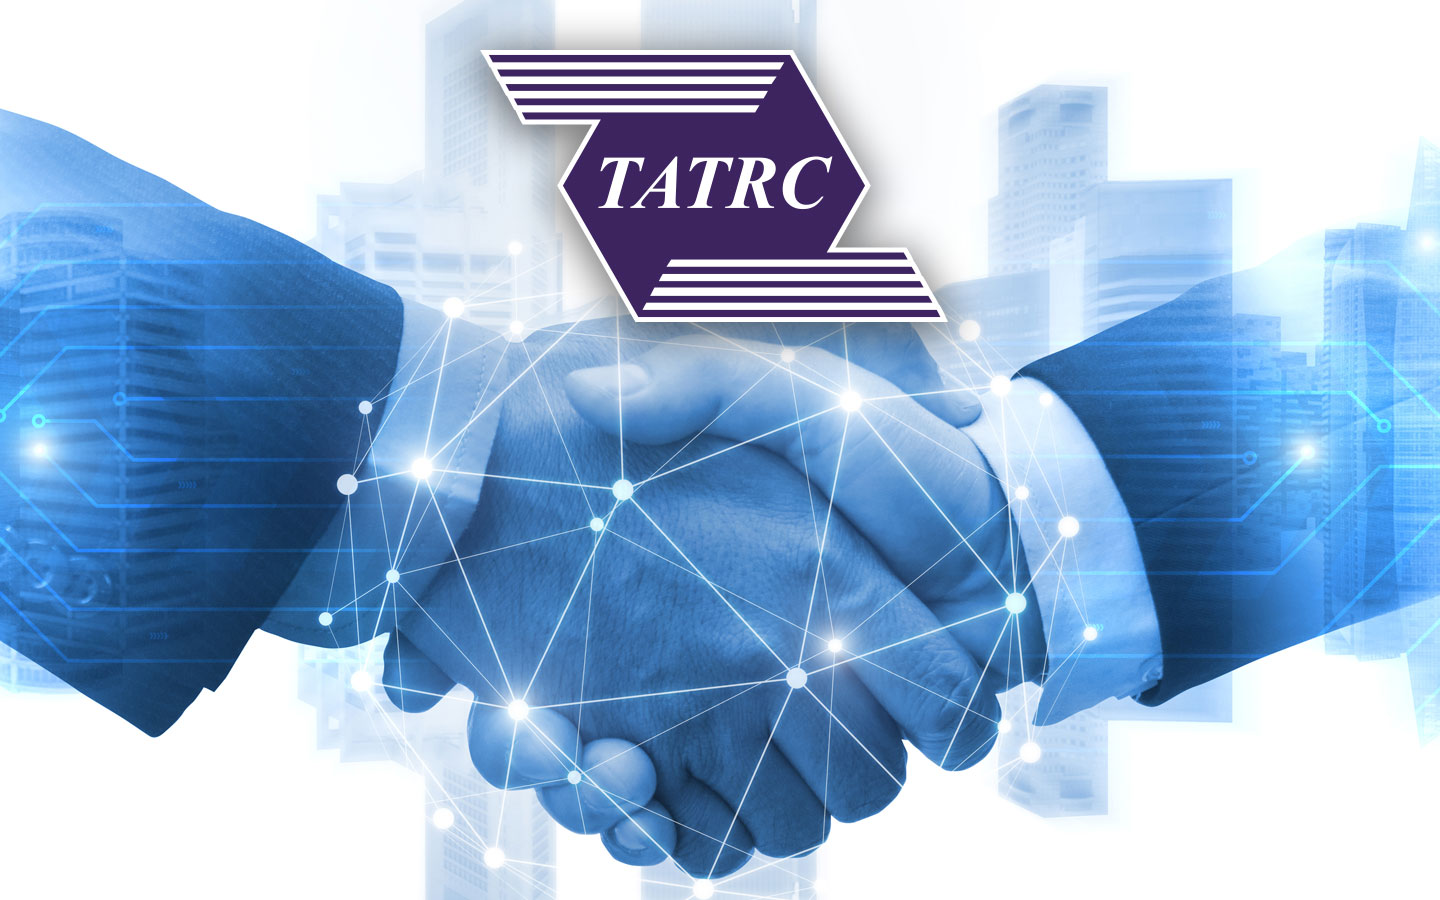 Illustration of a handshake with a TATRC logo